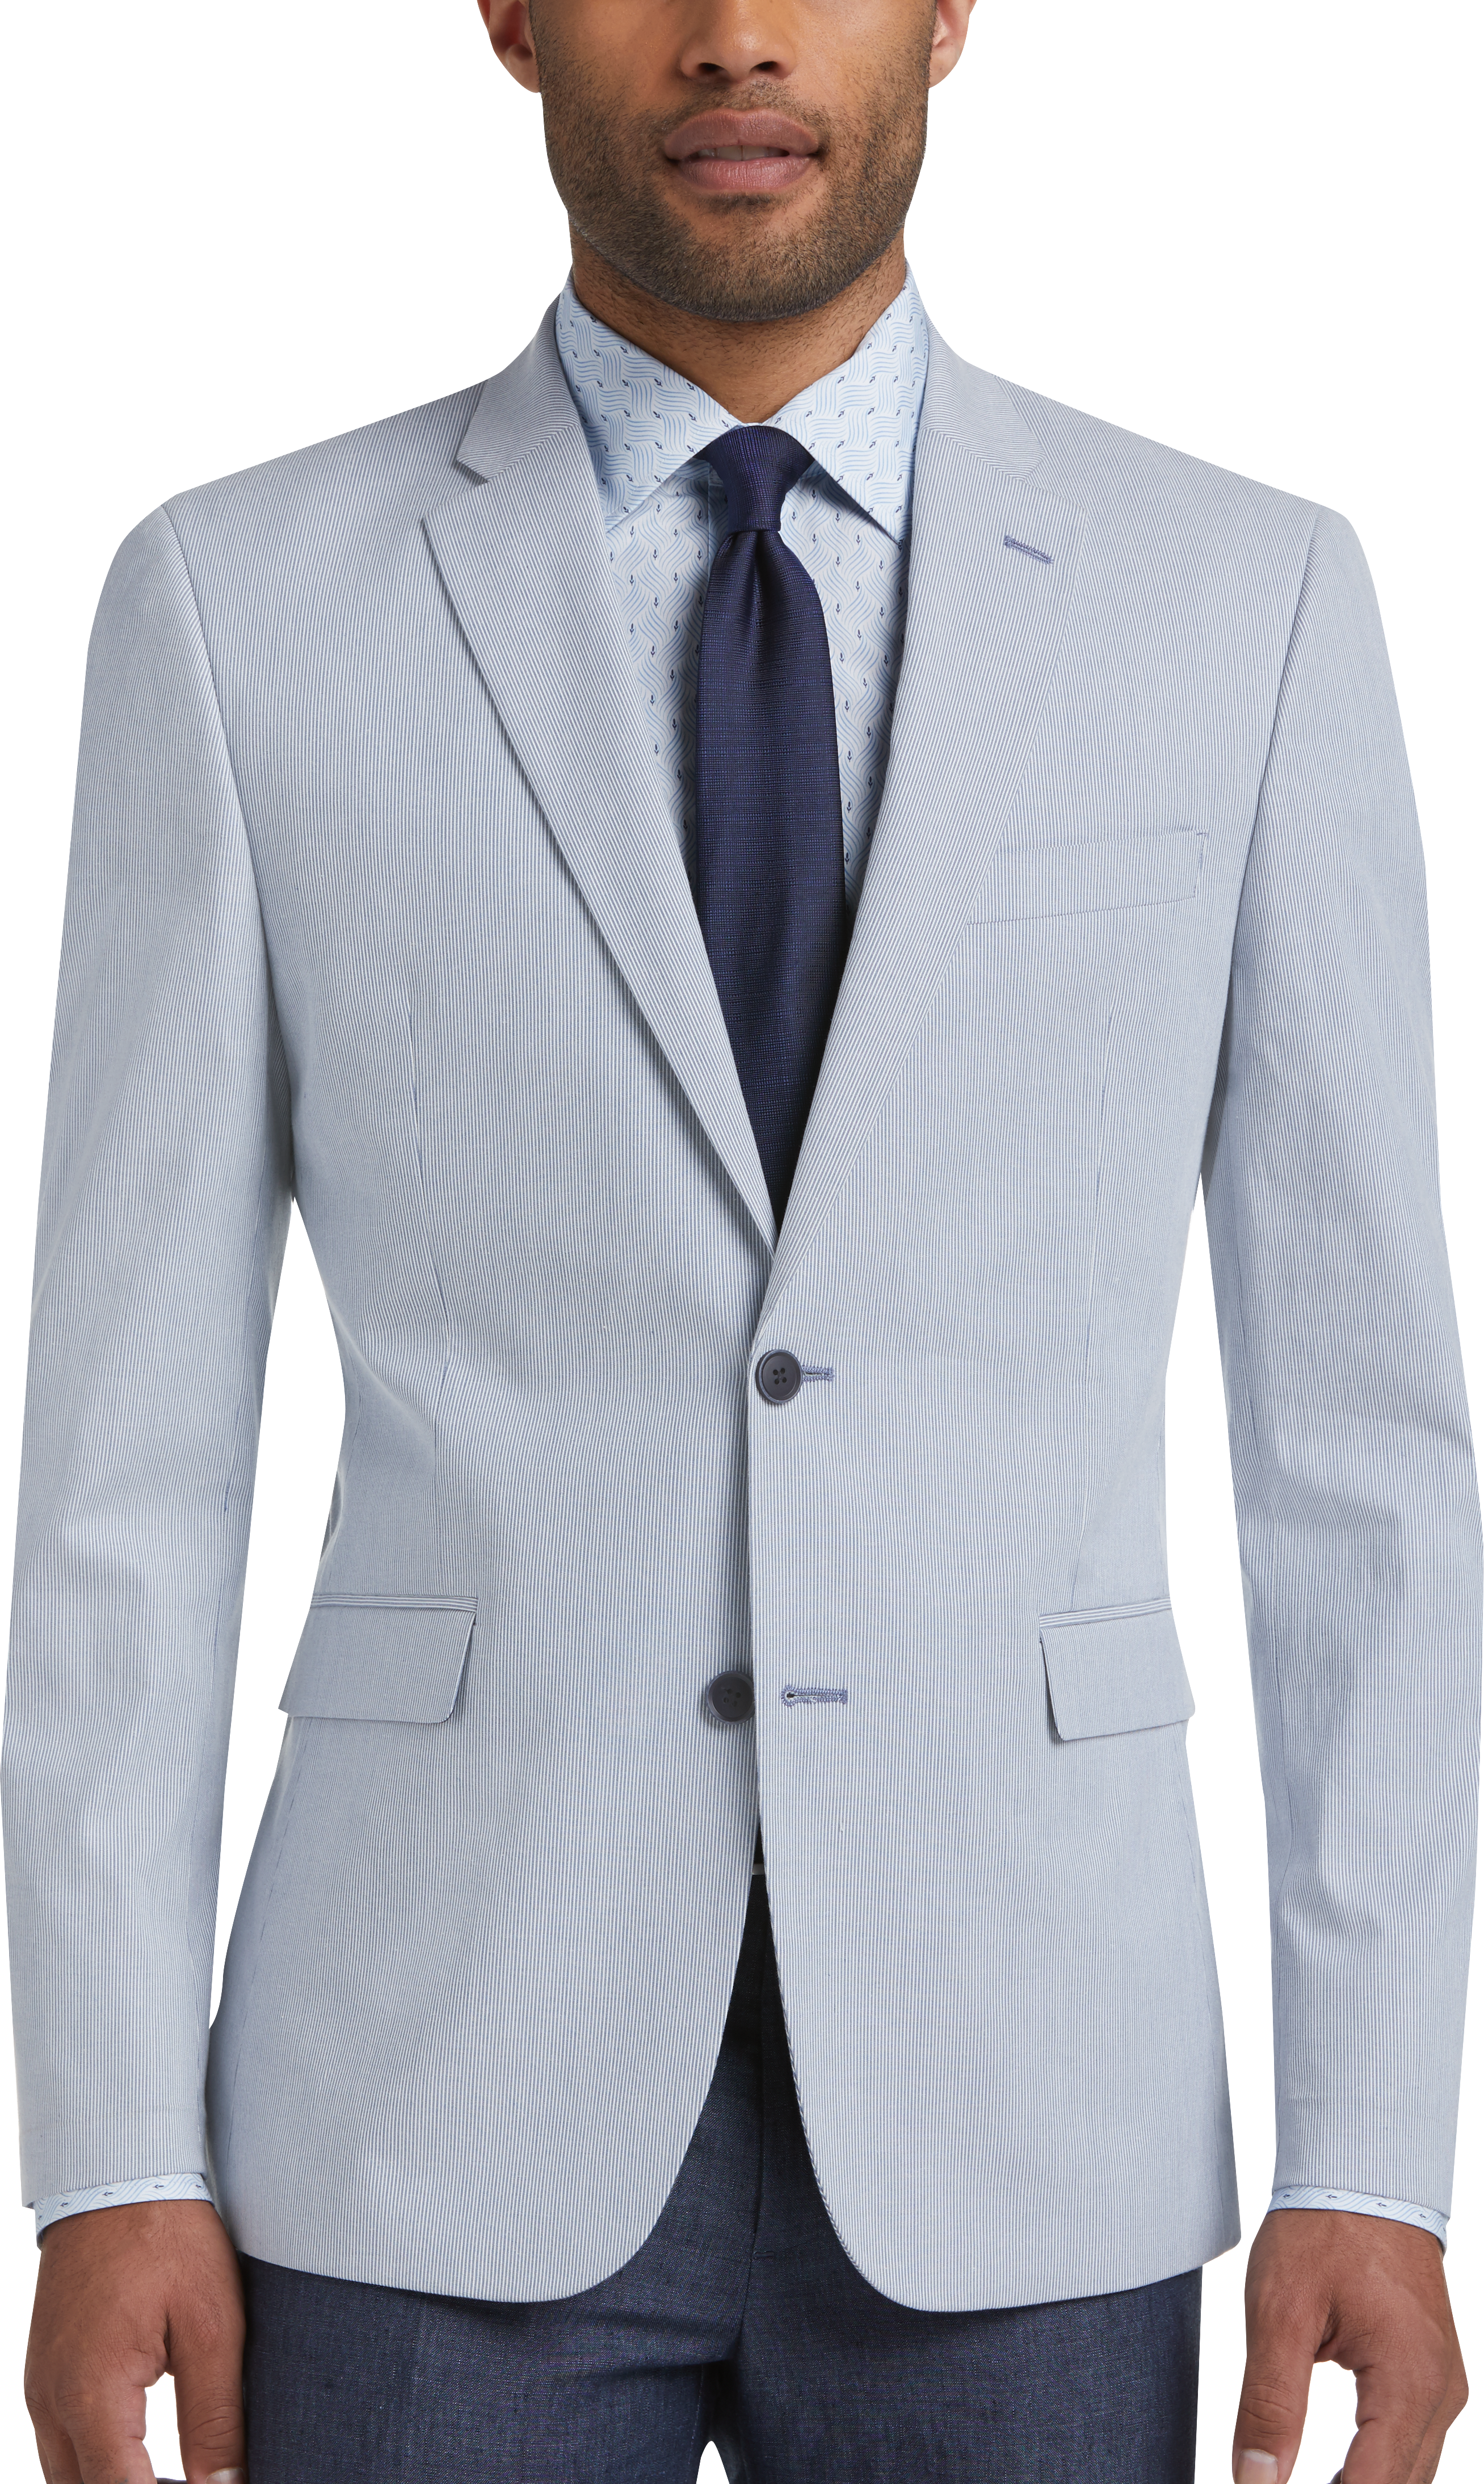 tommy hilfiger light blue suit